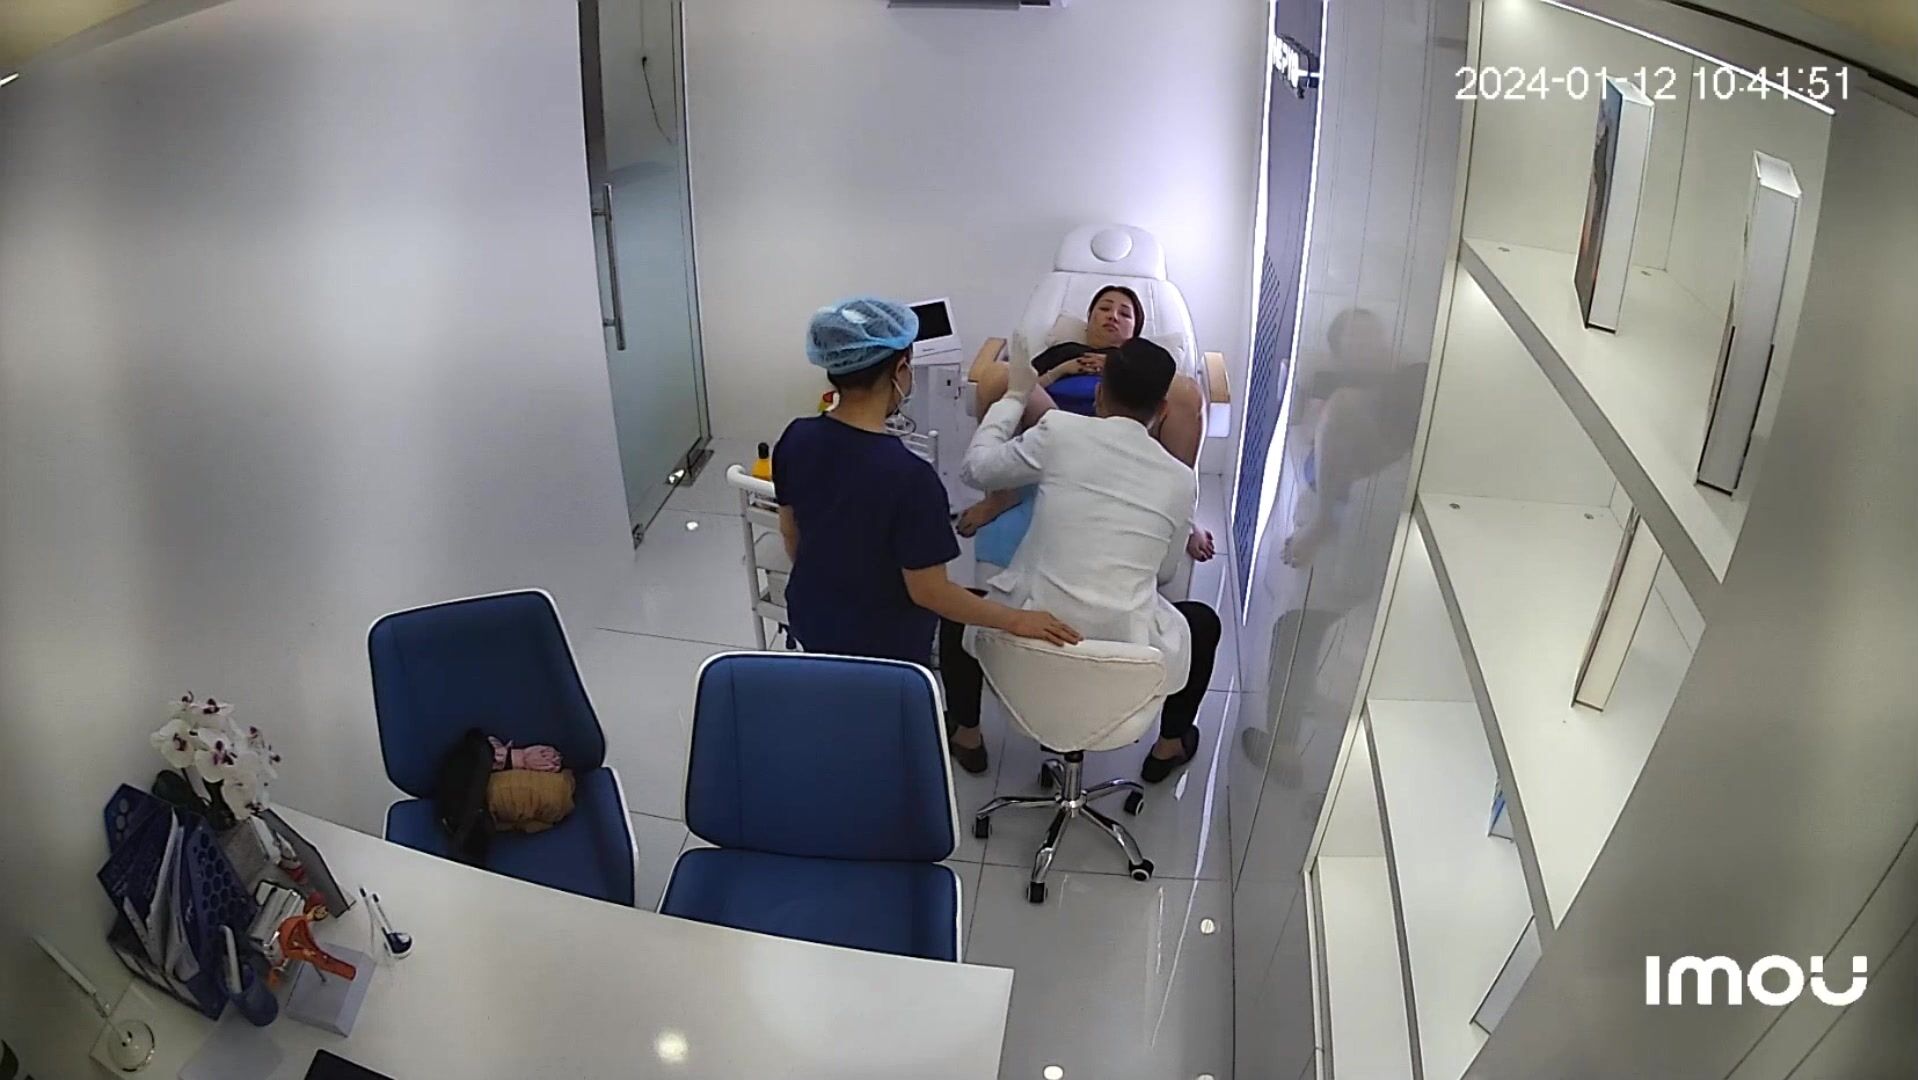 Doctor office gyno exams porn videos (2024-01-12)